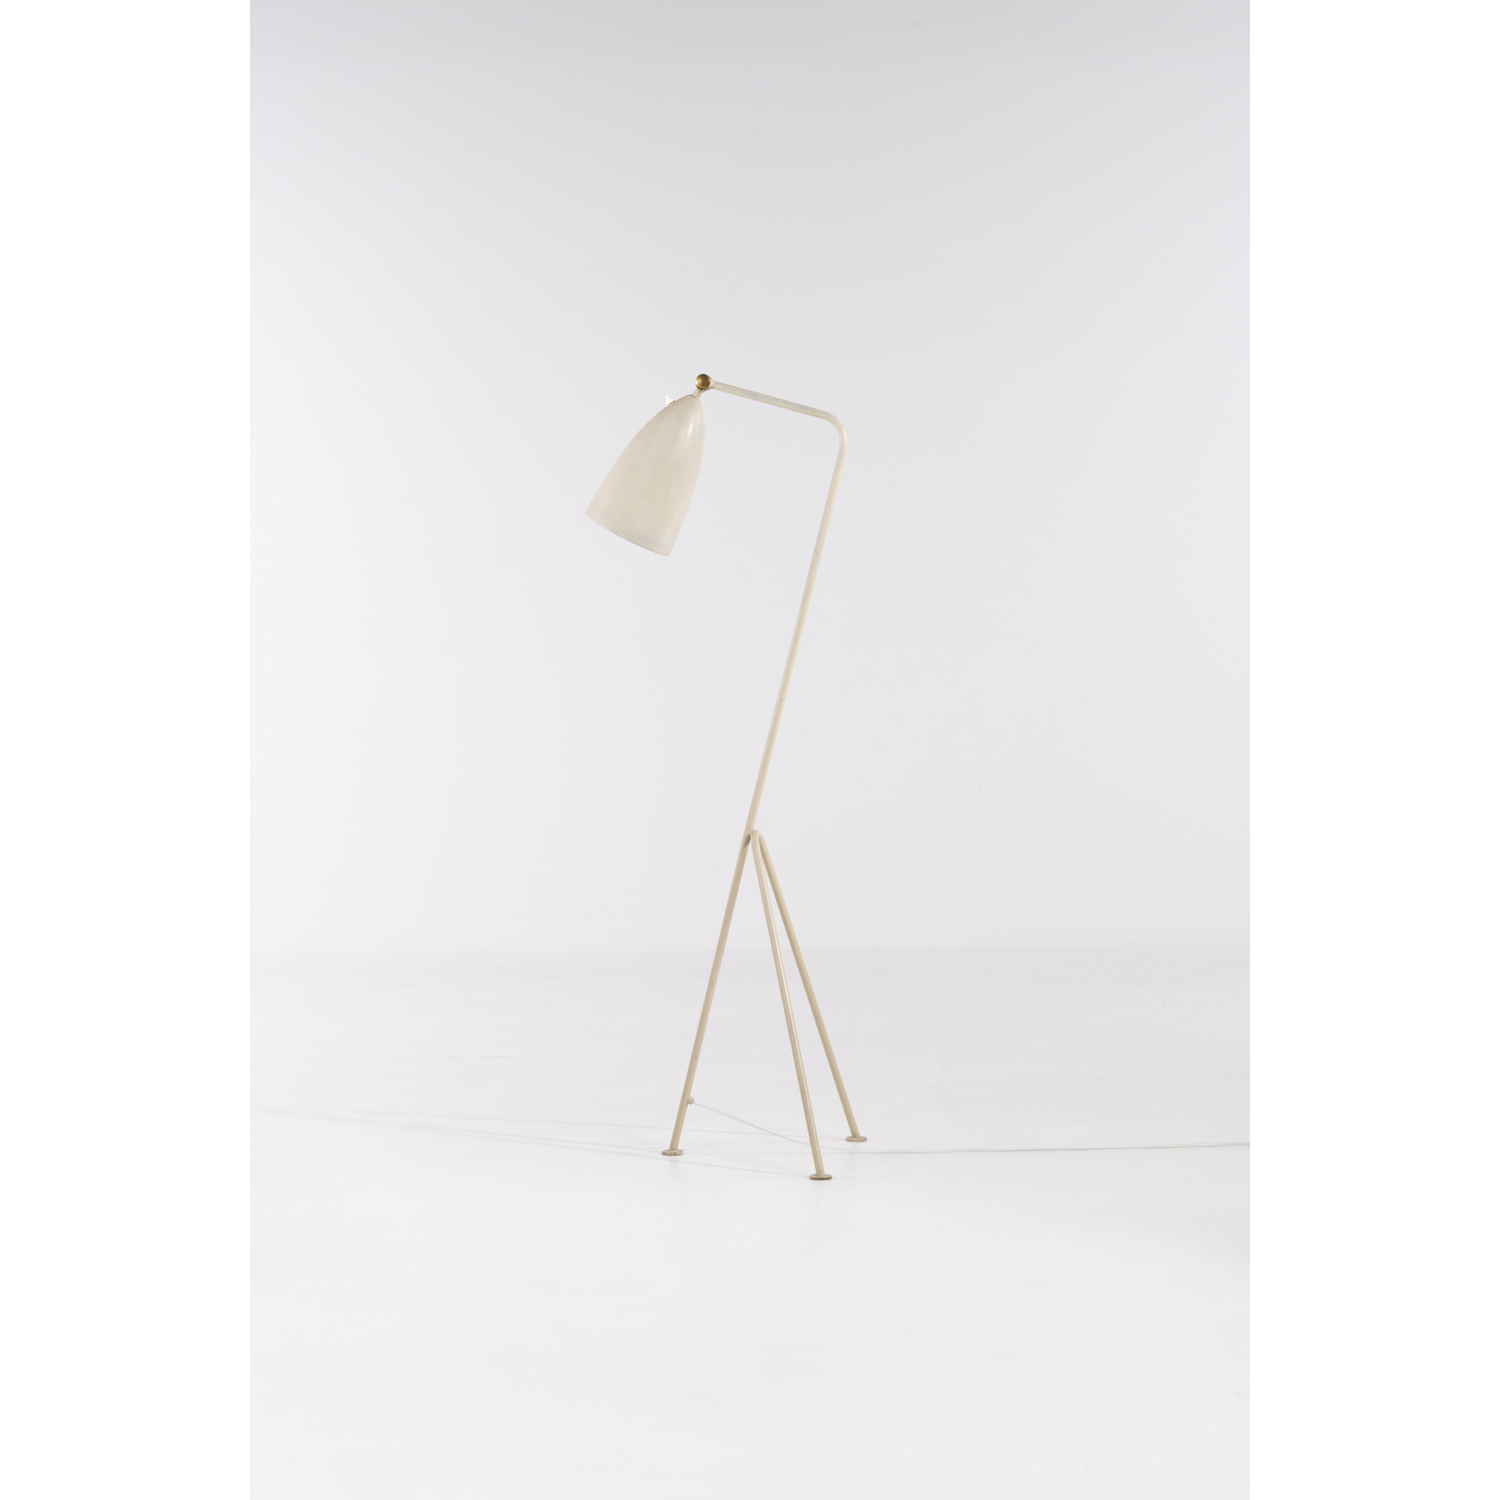 Greta Magnusson Grossman 'G-10' Floor Lamp